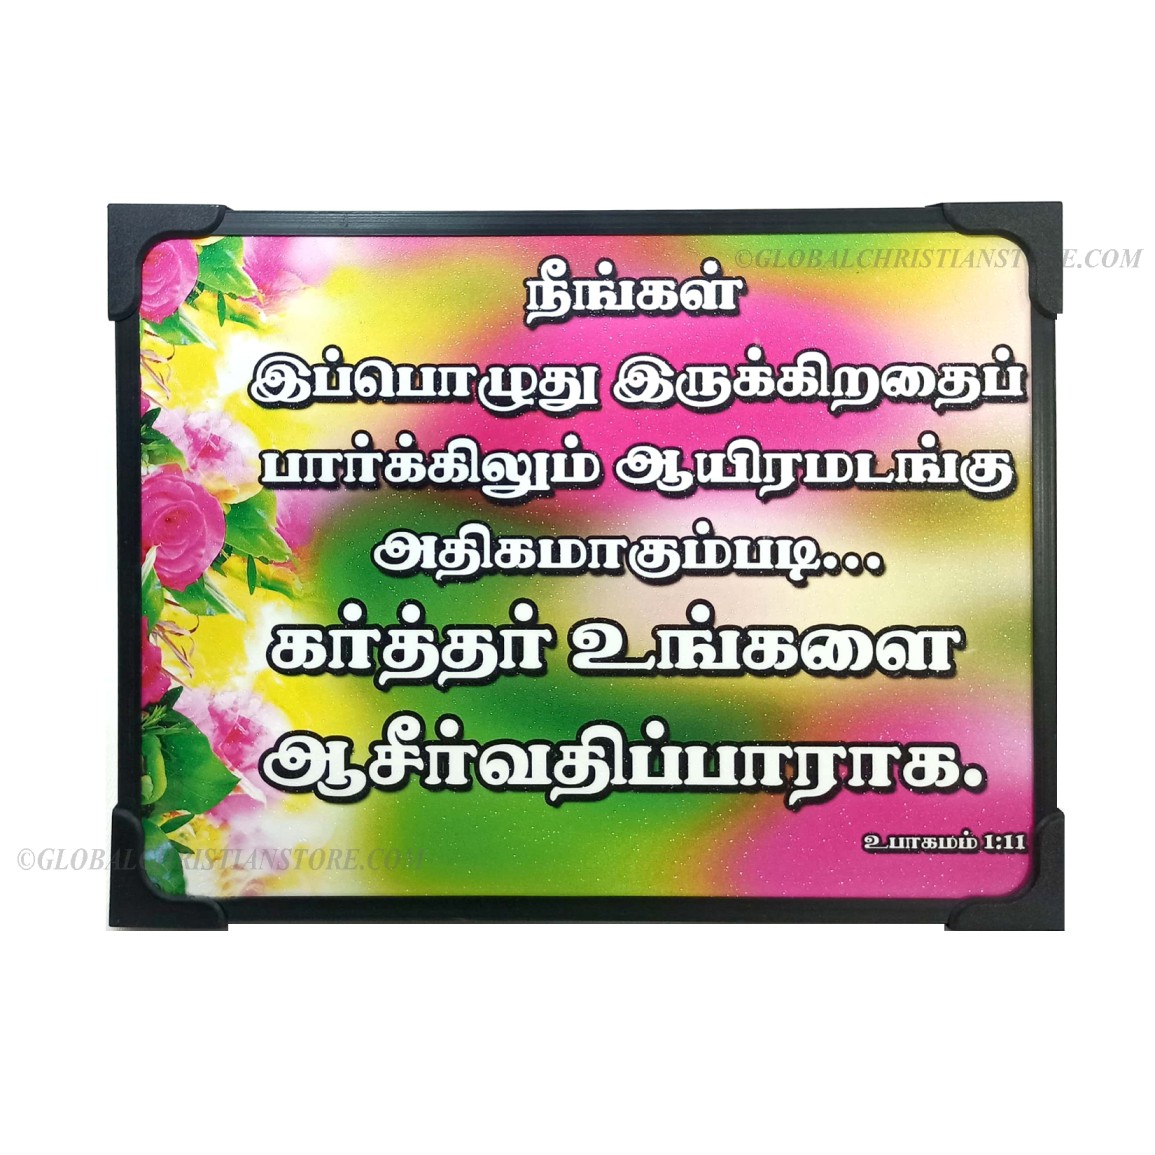 Neengal Ippodhu irukiradhai parkilum Tamil Promise Verse Board ...